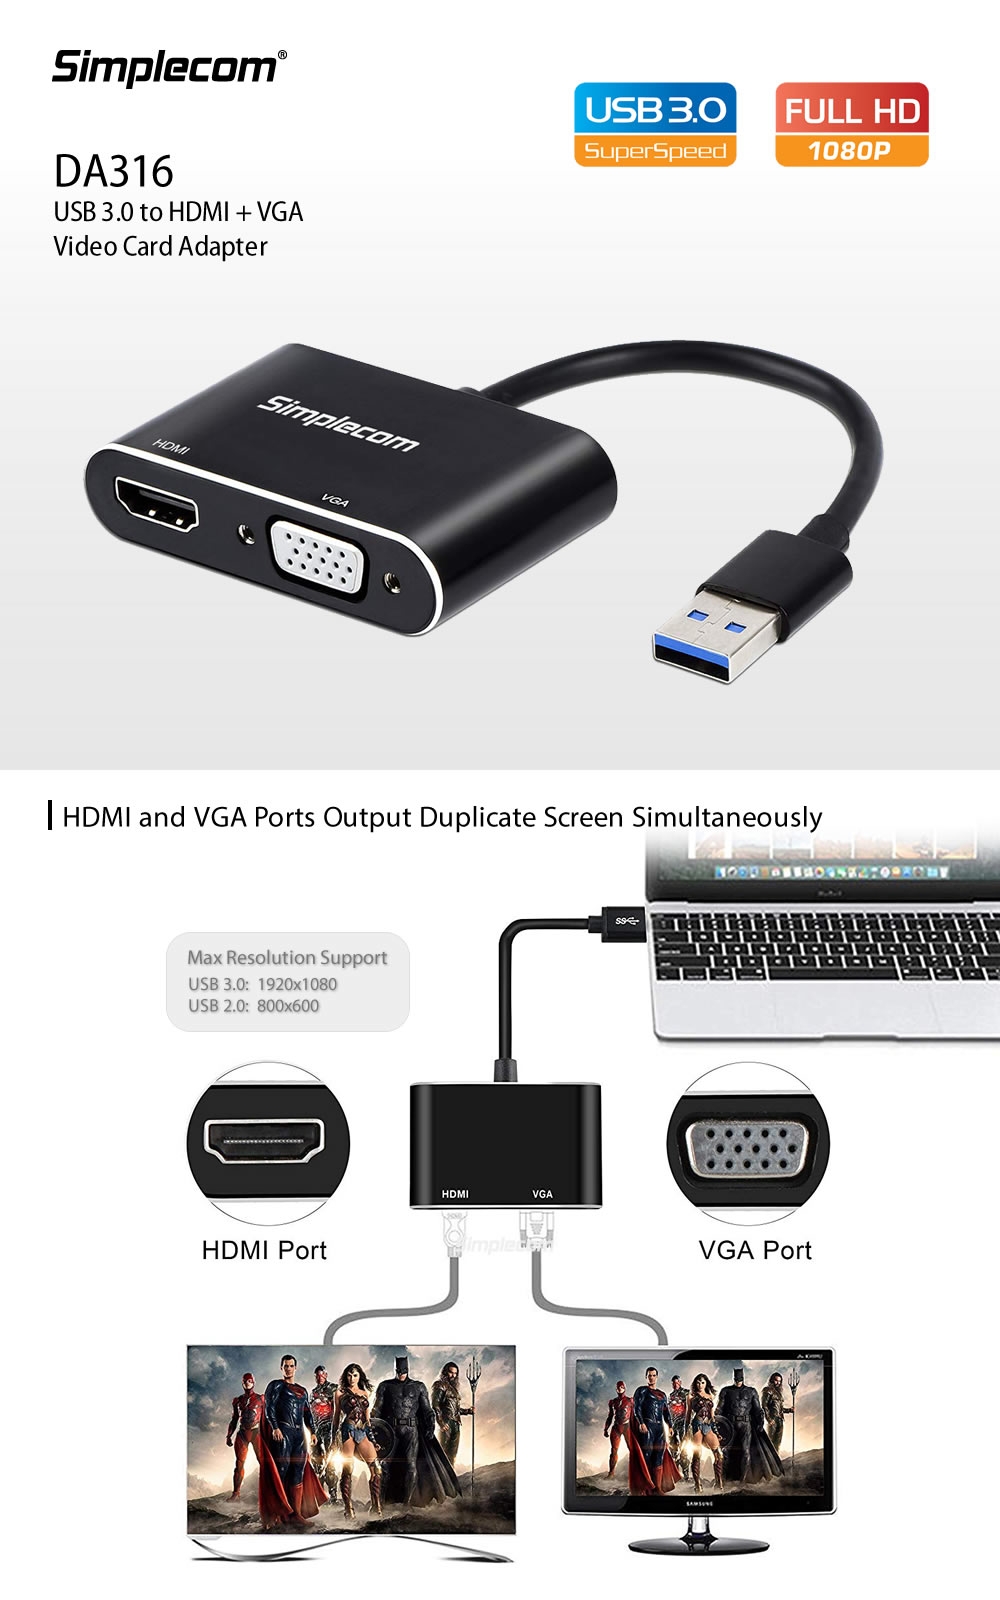 Simplecom DA316 USB 3.0 to HDMI + VGA Video Card Adapter Full HD 1080p 1